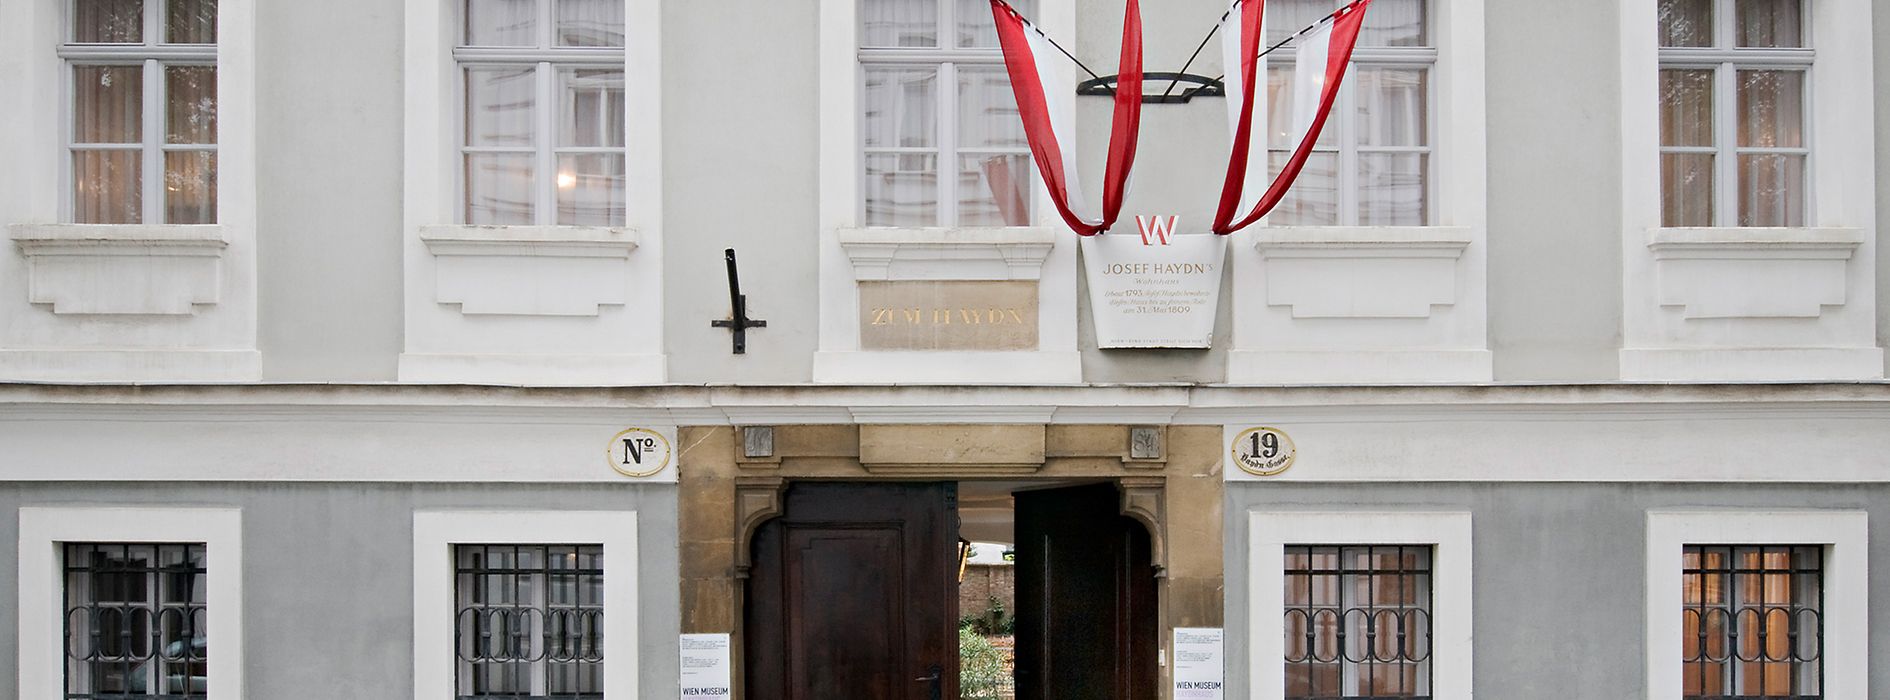 Haydn House, entrance